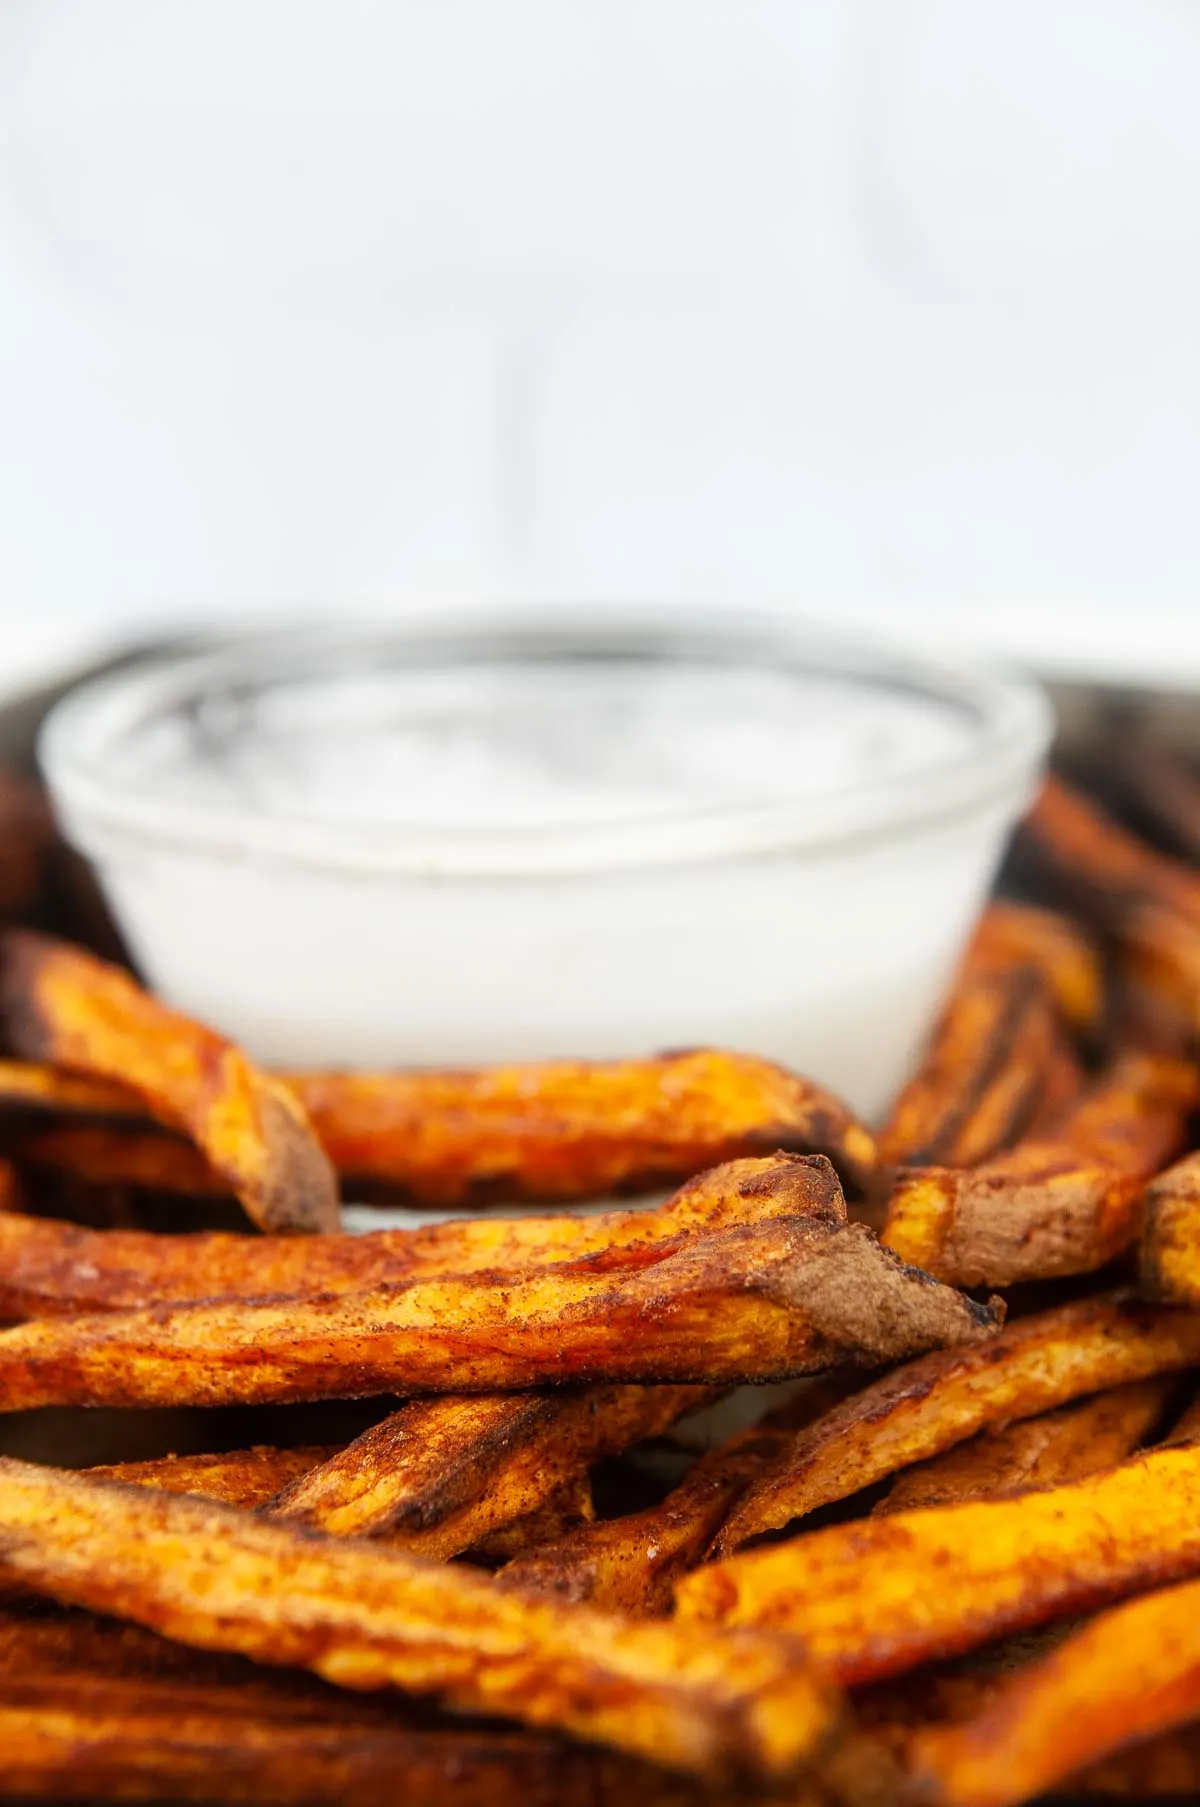 Baked Cinnamon Sugar sweet potato fries with a powder sugar glaze dip